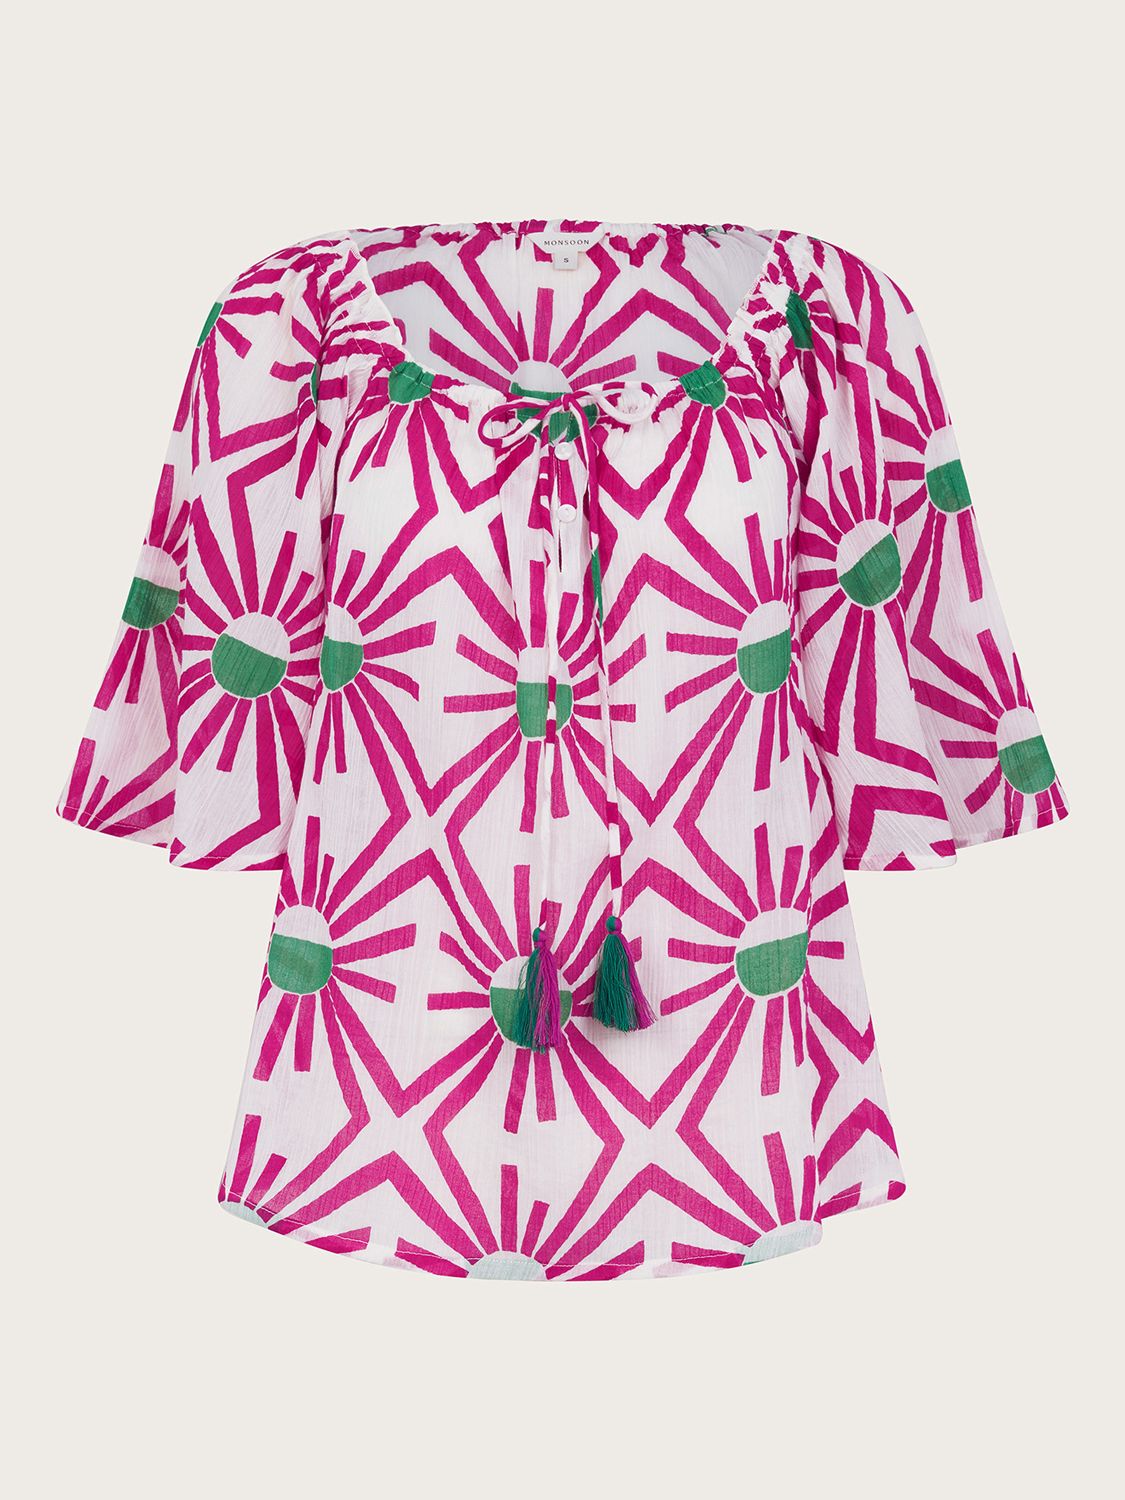 Monsoon Zamora Geometric Print Cotton Top, Pink/Multi, S